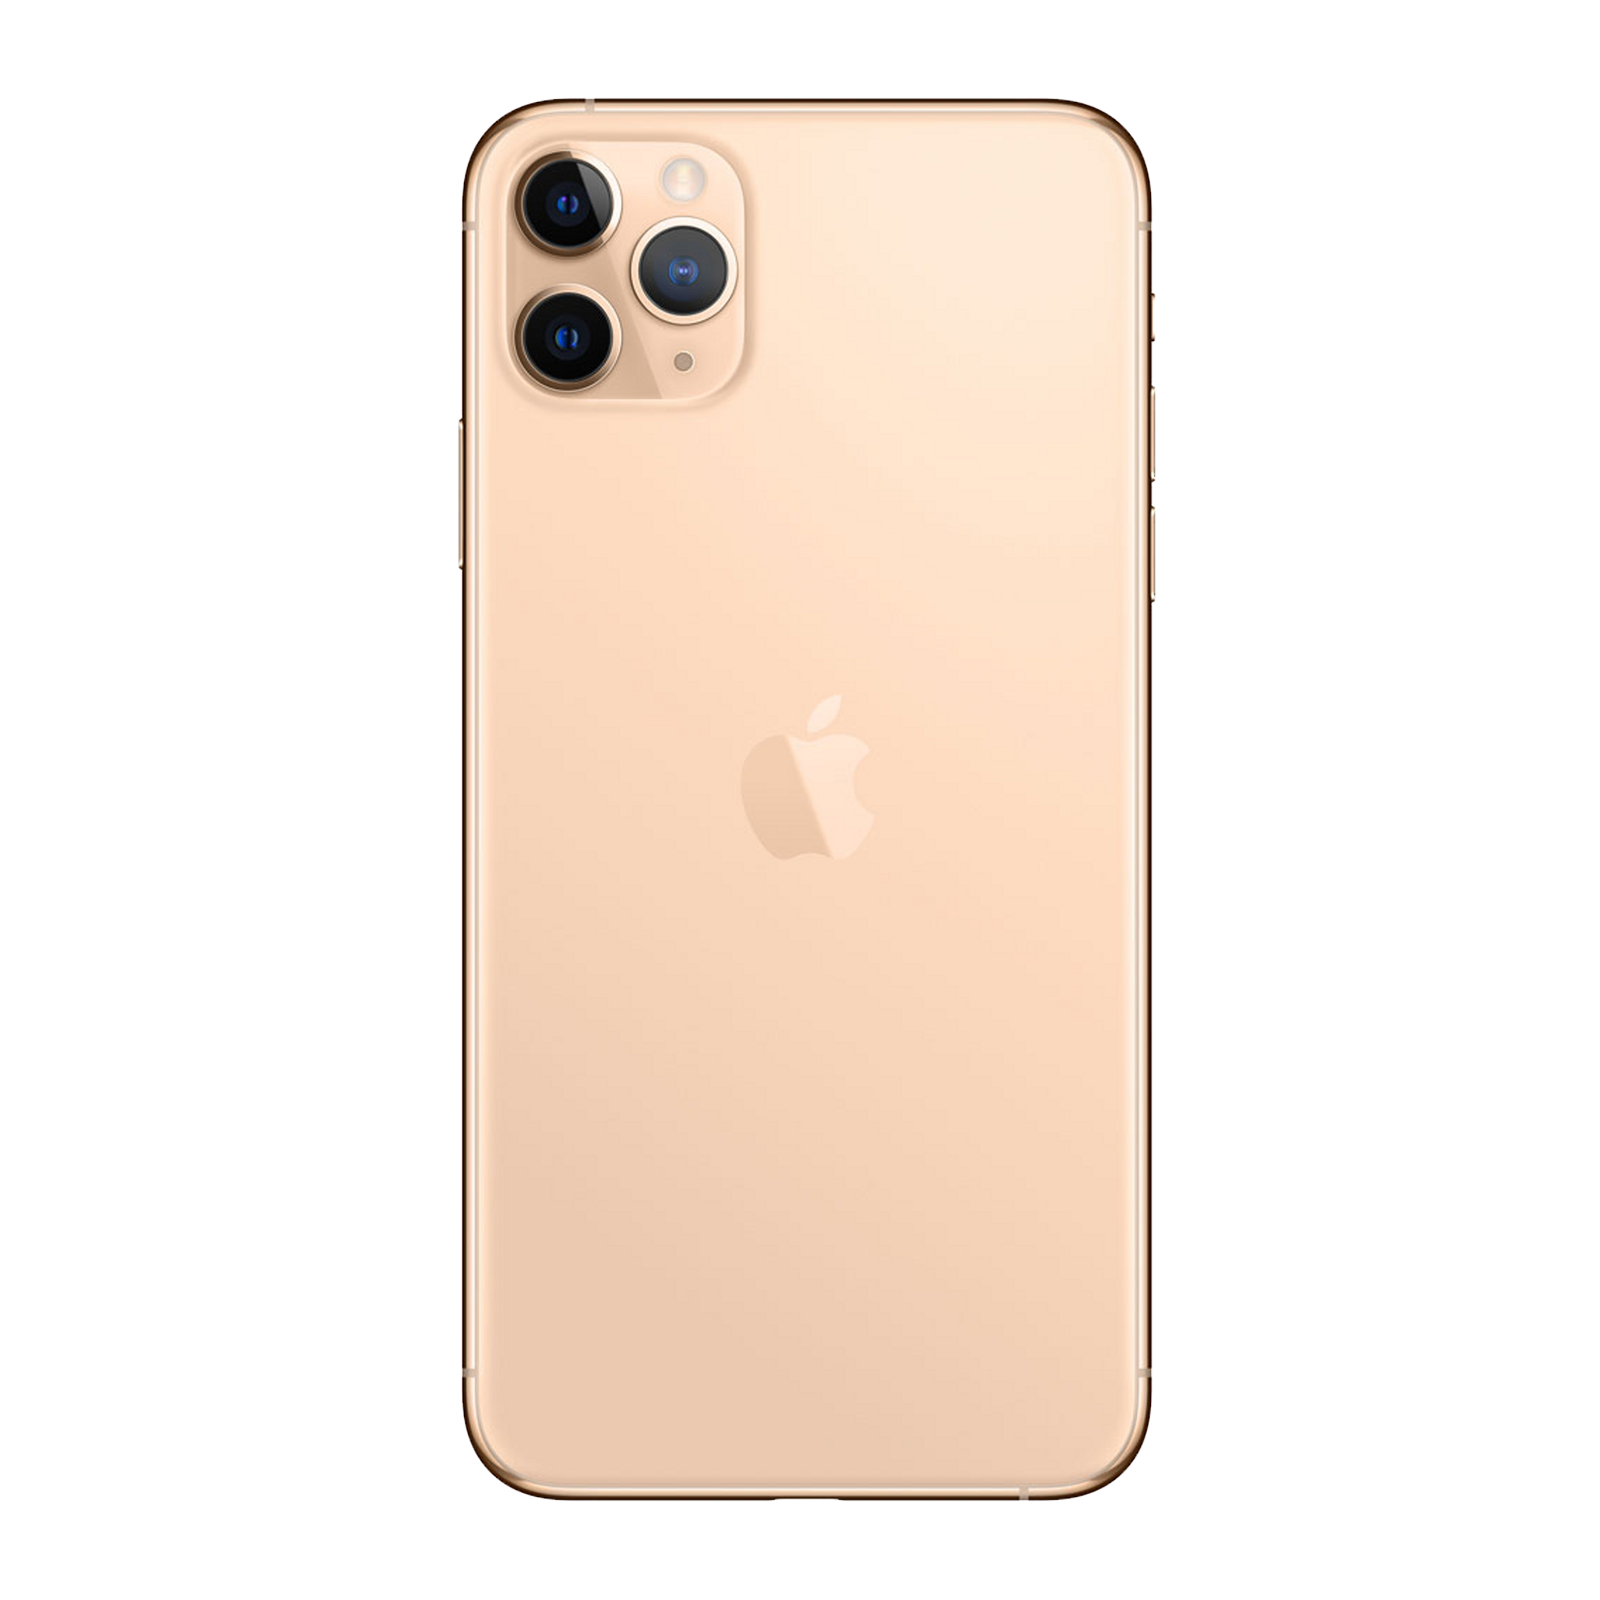 Apple iPhone 11 Pro Max 512GB Gold Fair - Unlocked